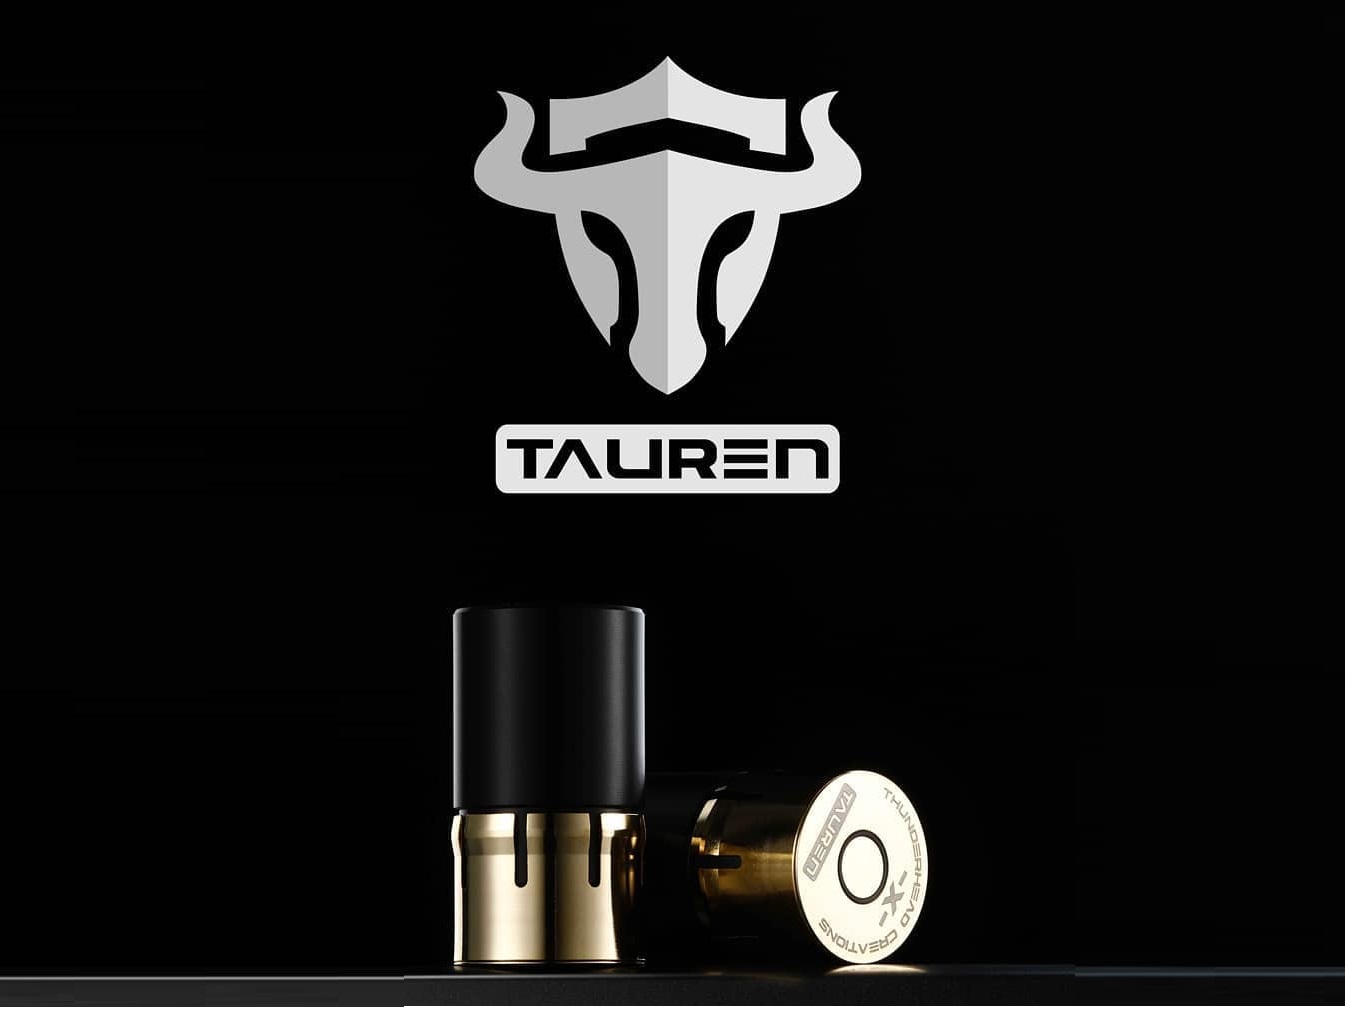 Thunderhead Creations Tauren Hybrid mod - так мех мод, а так уже просто мод...